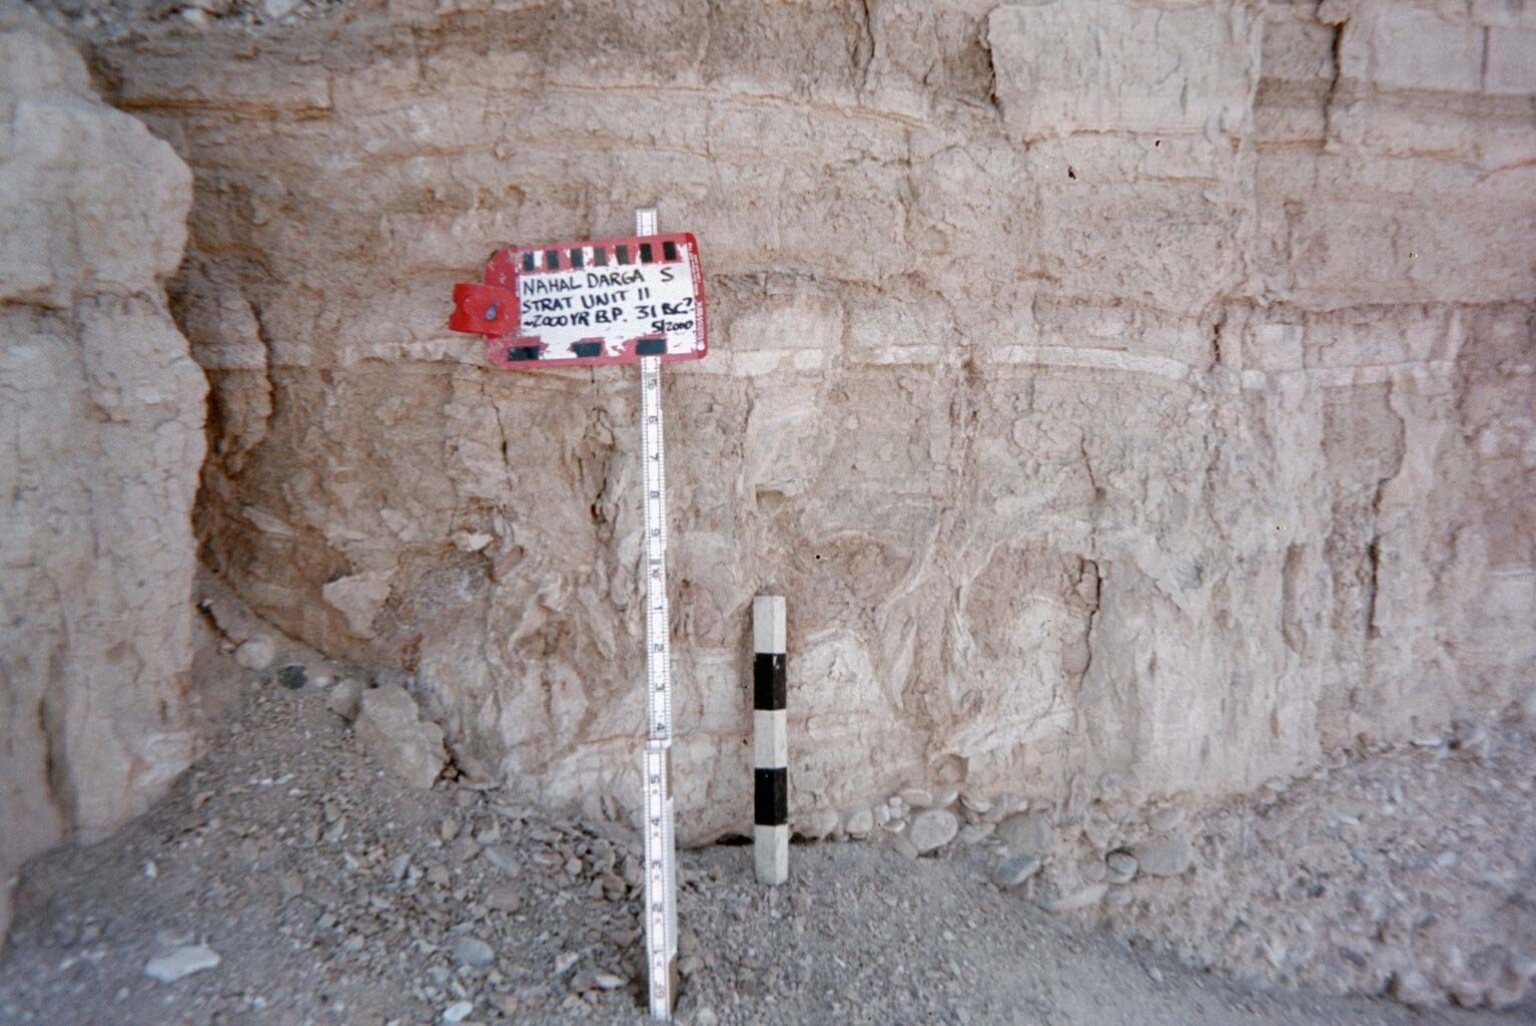 Possible 31 BCE Seismite at Nahal Darga 